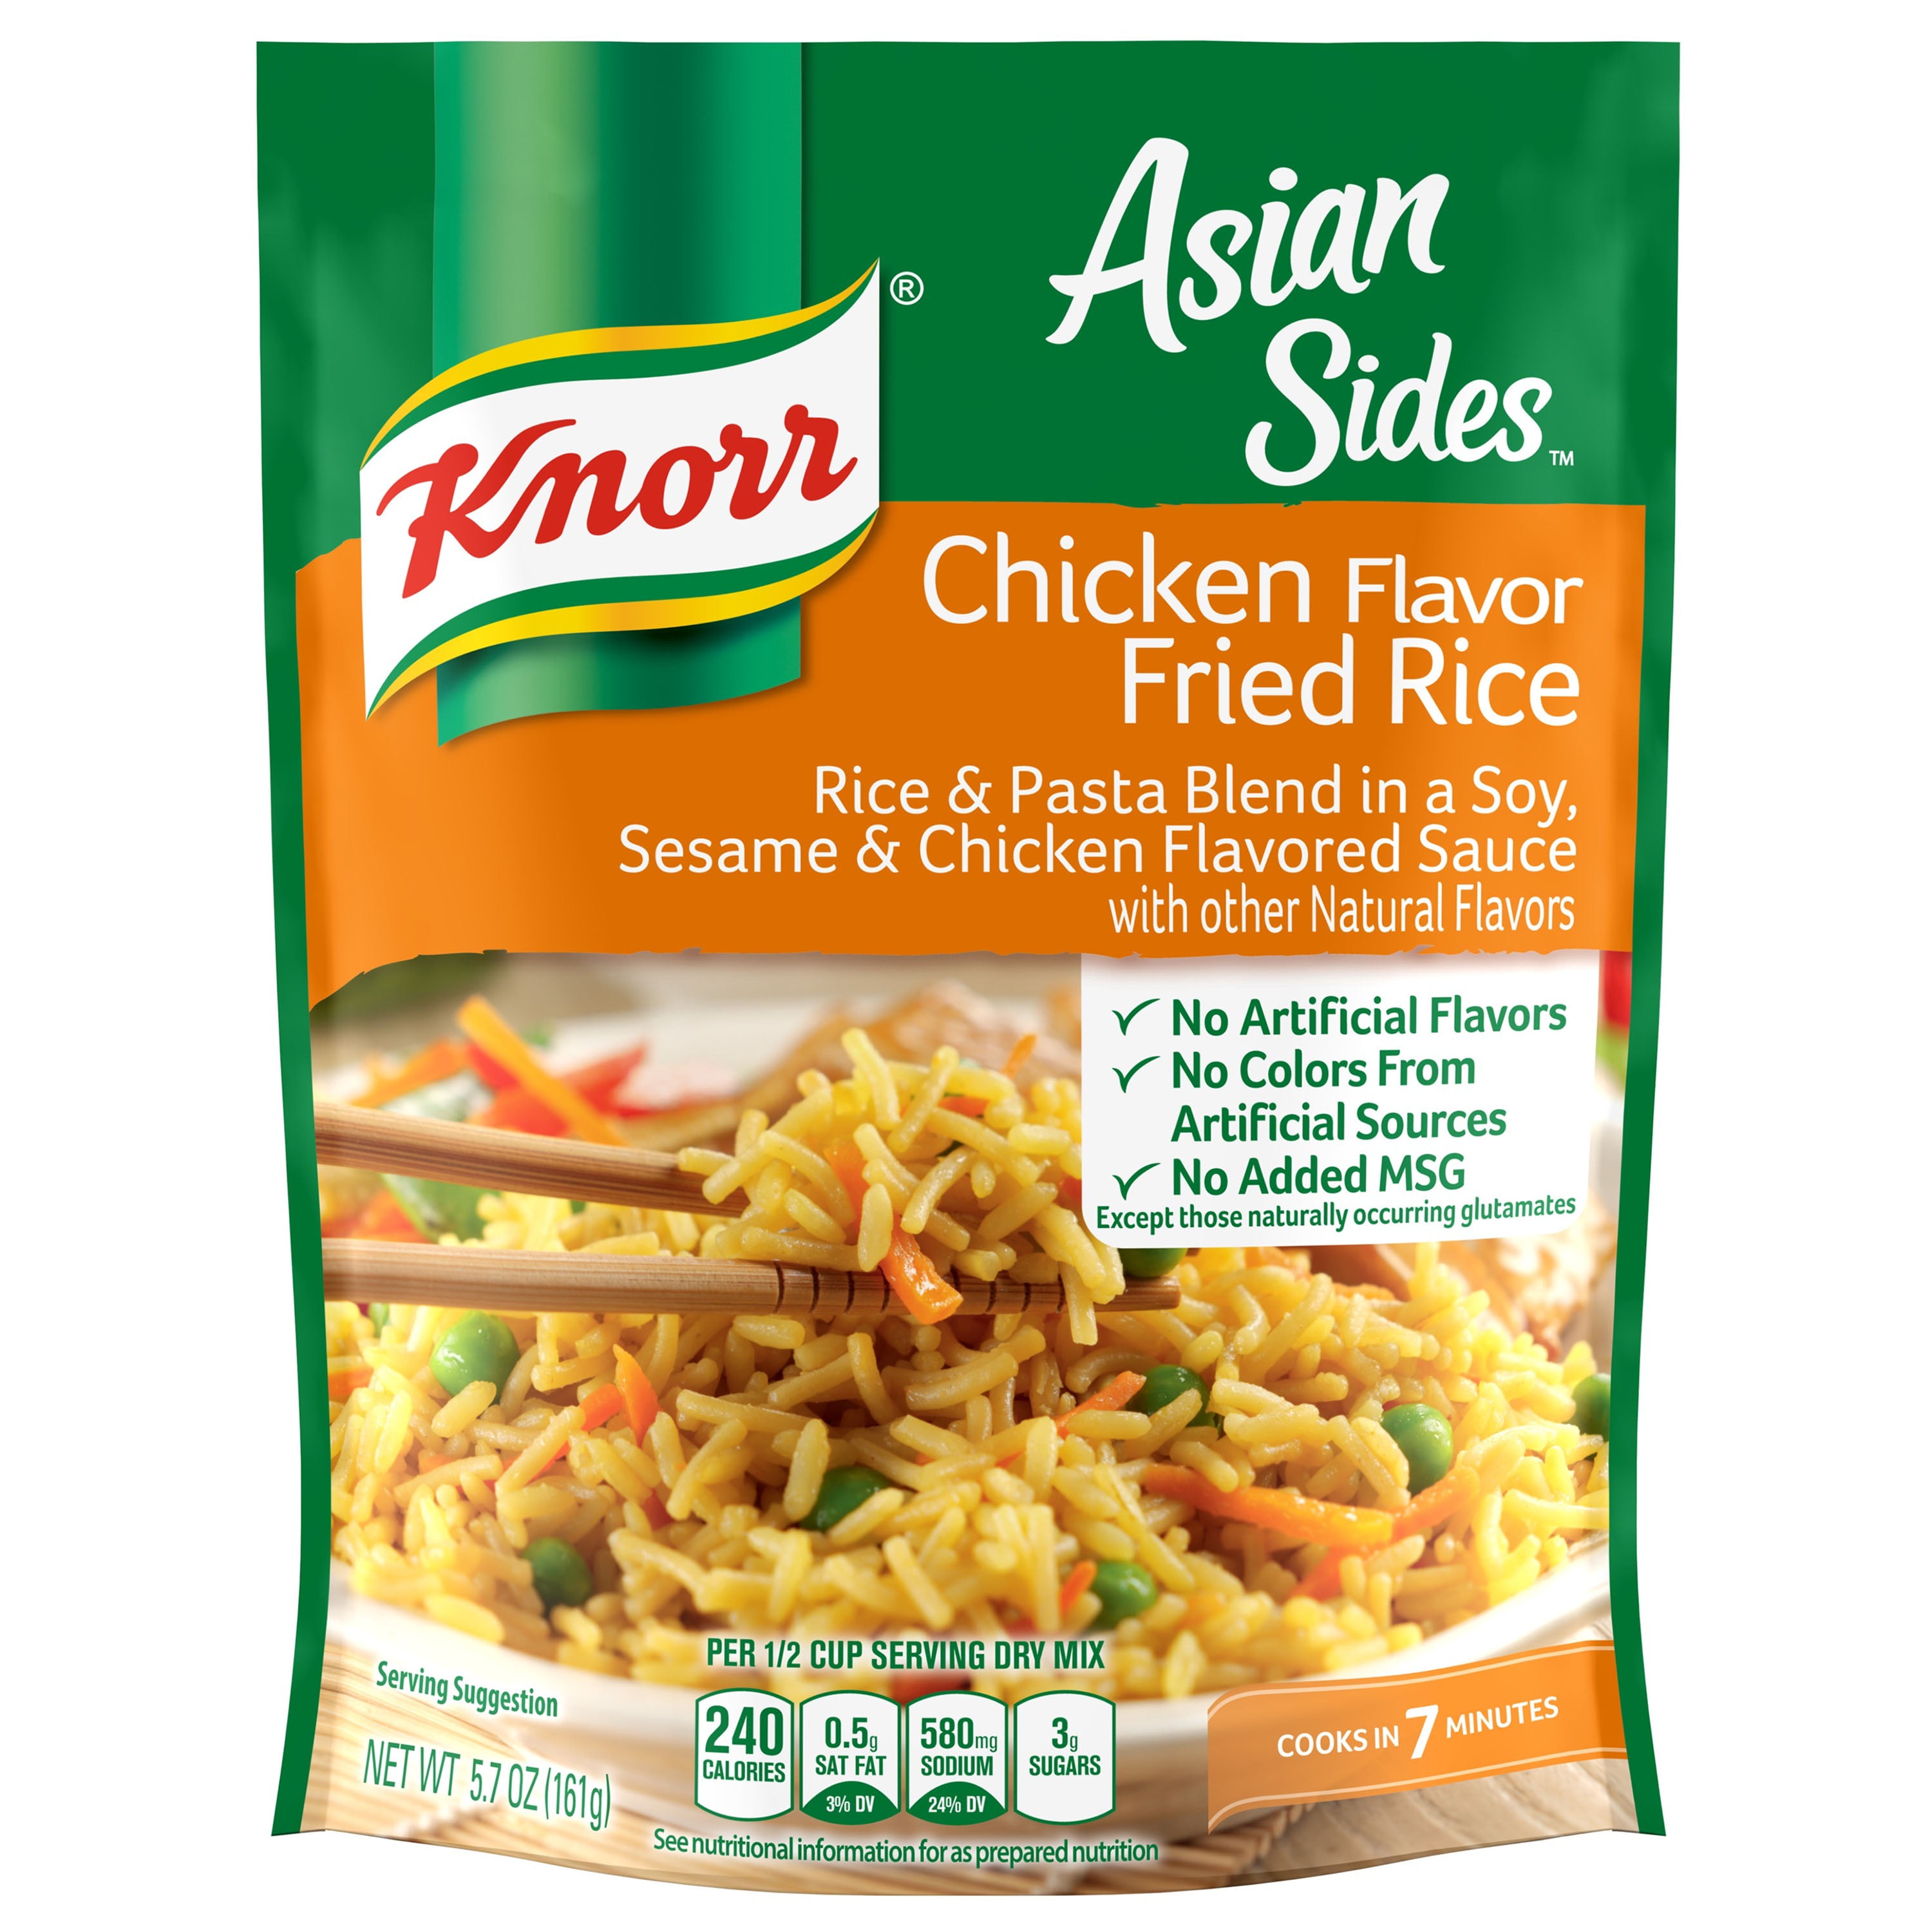 rice knorr chicken fried asian sides oz side flavor dish walmart